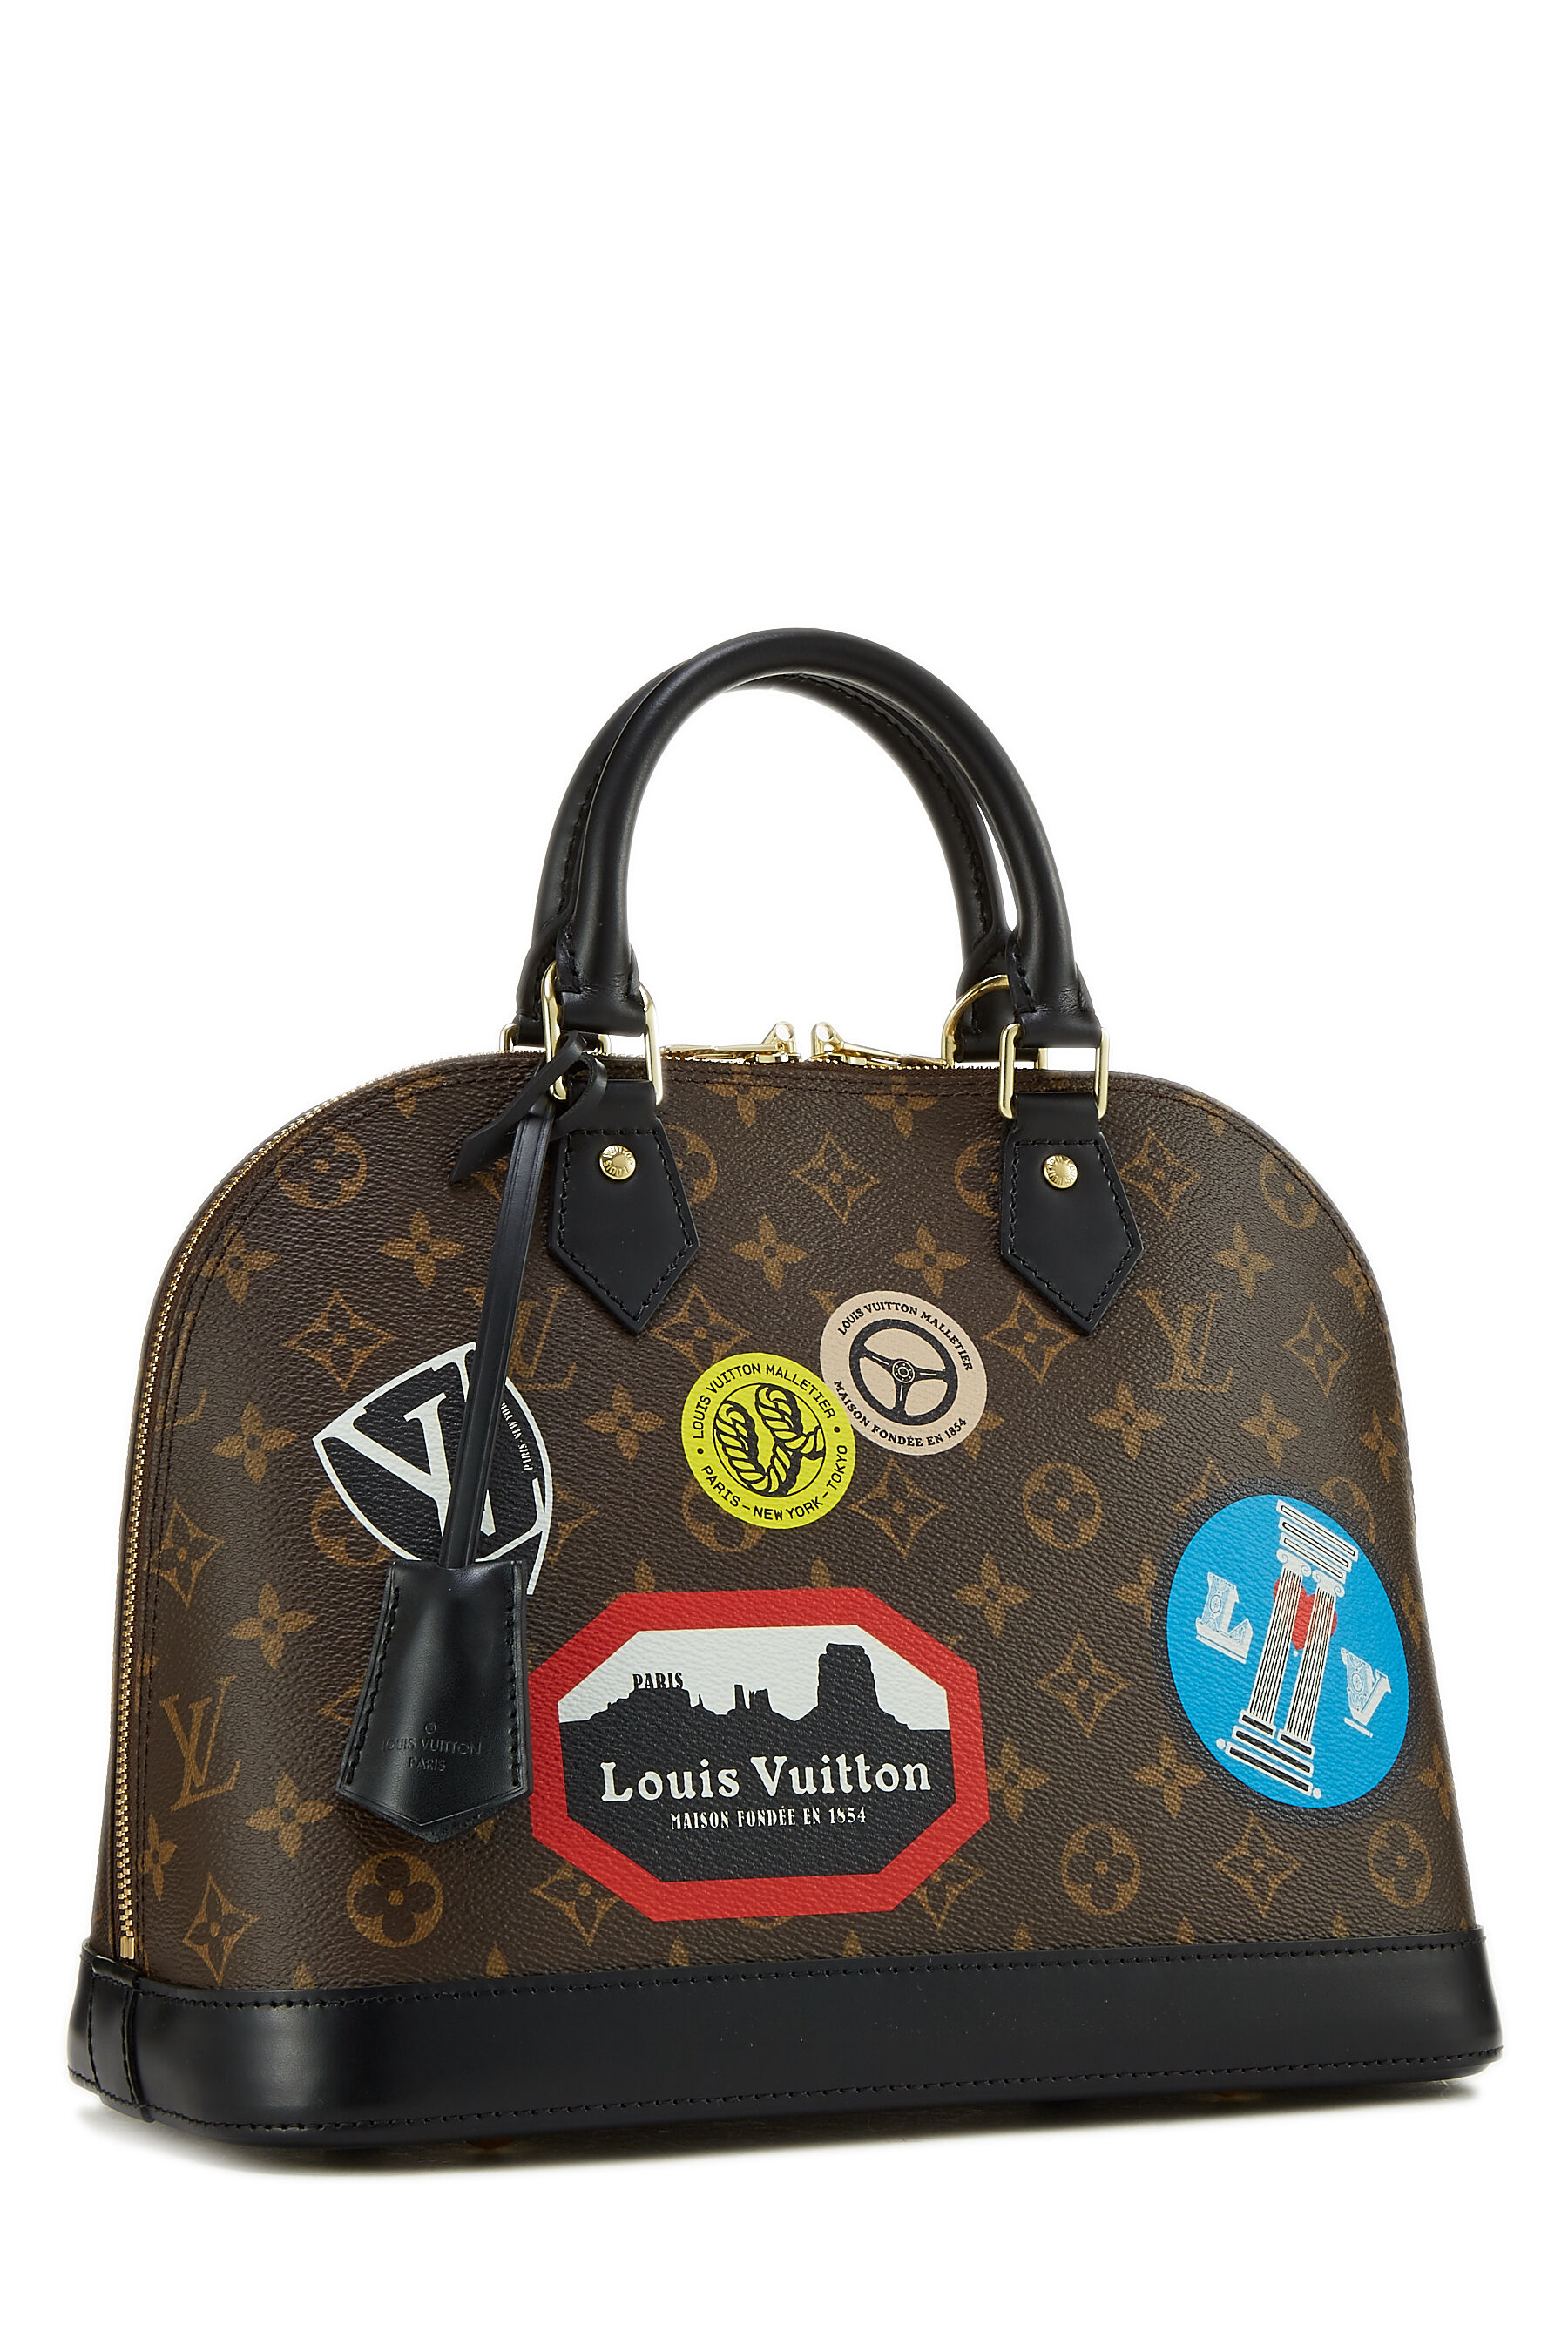 Global: Louis Vuitton Since 1854